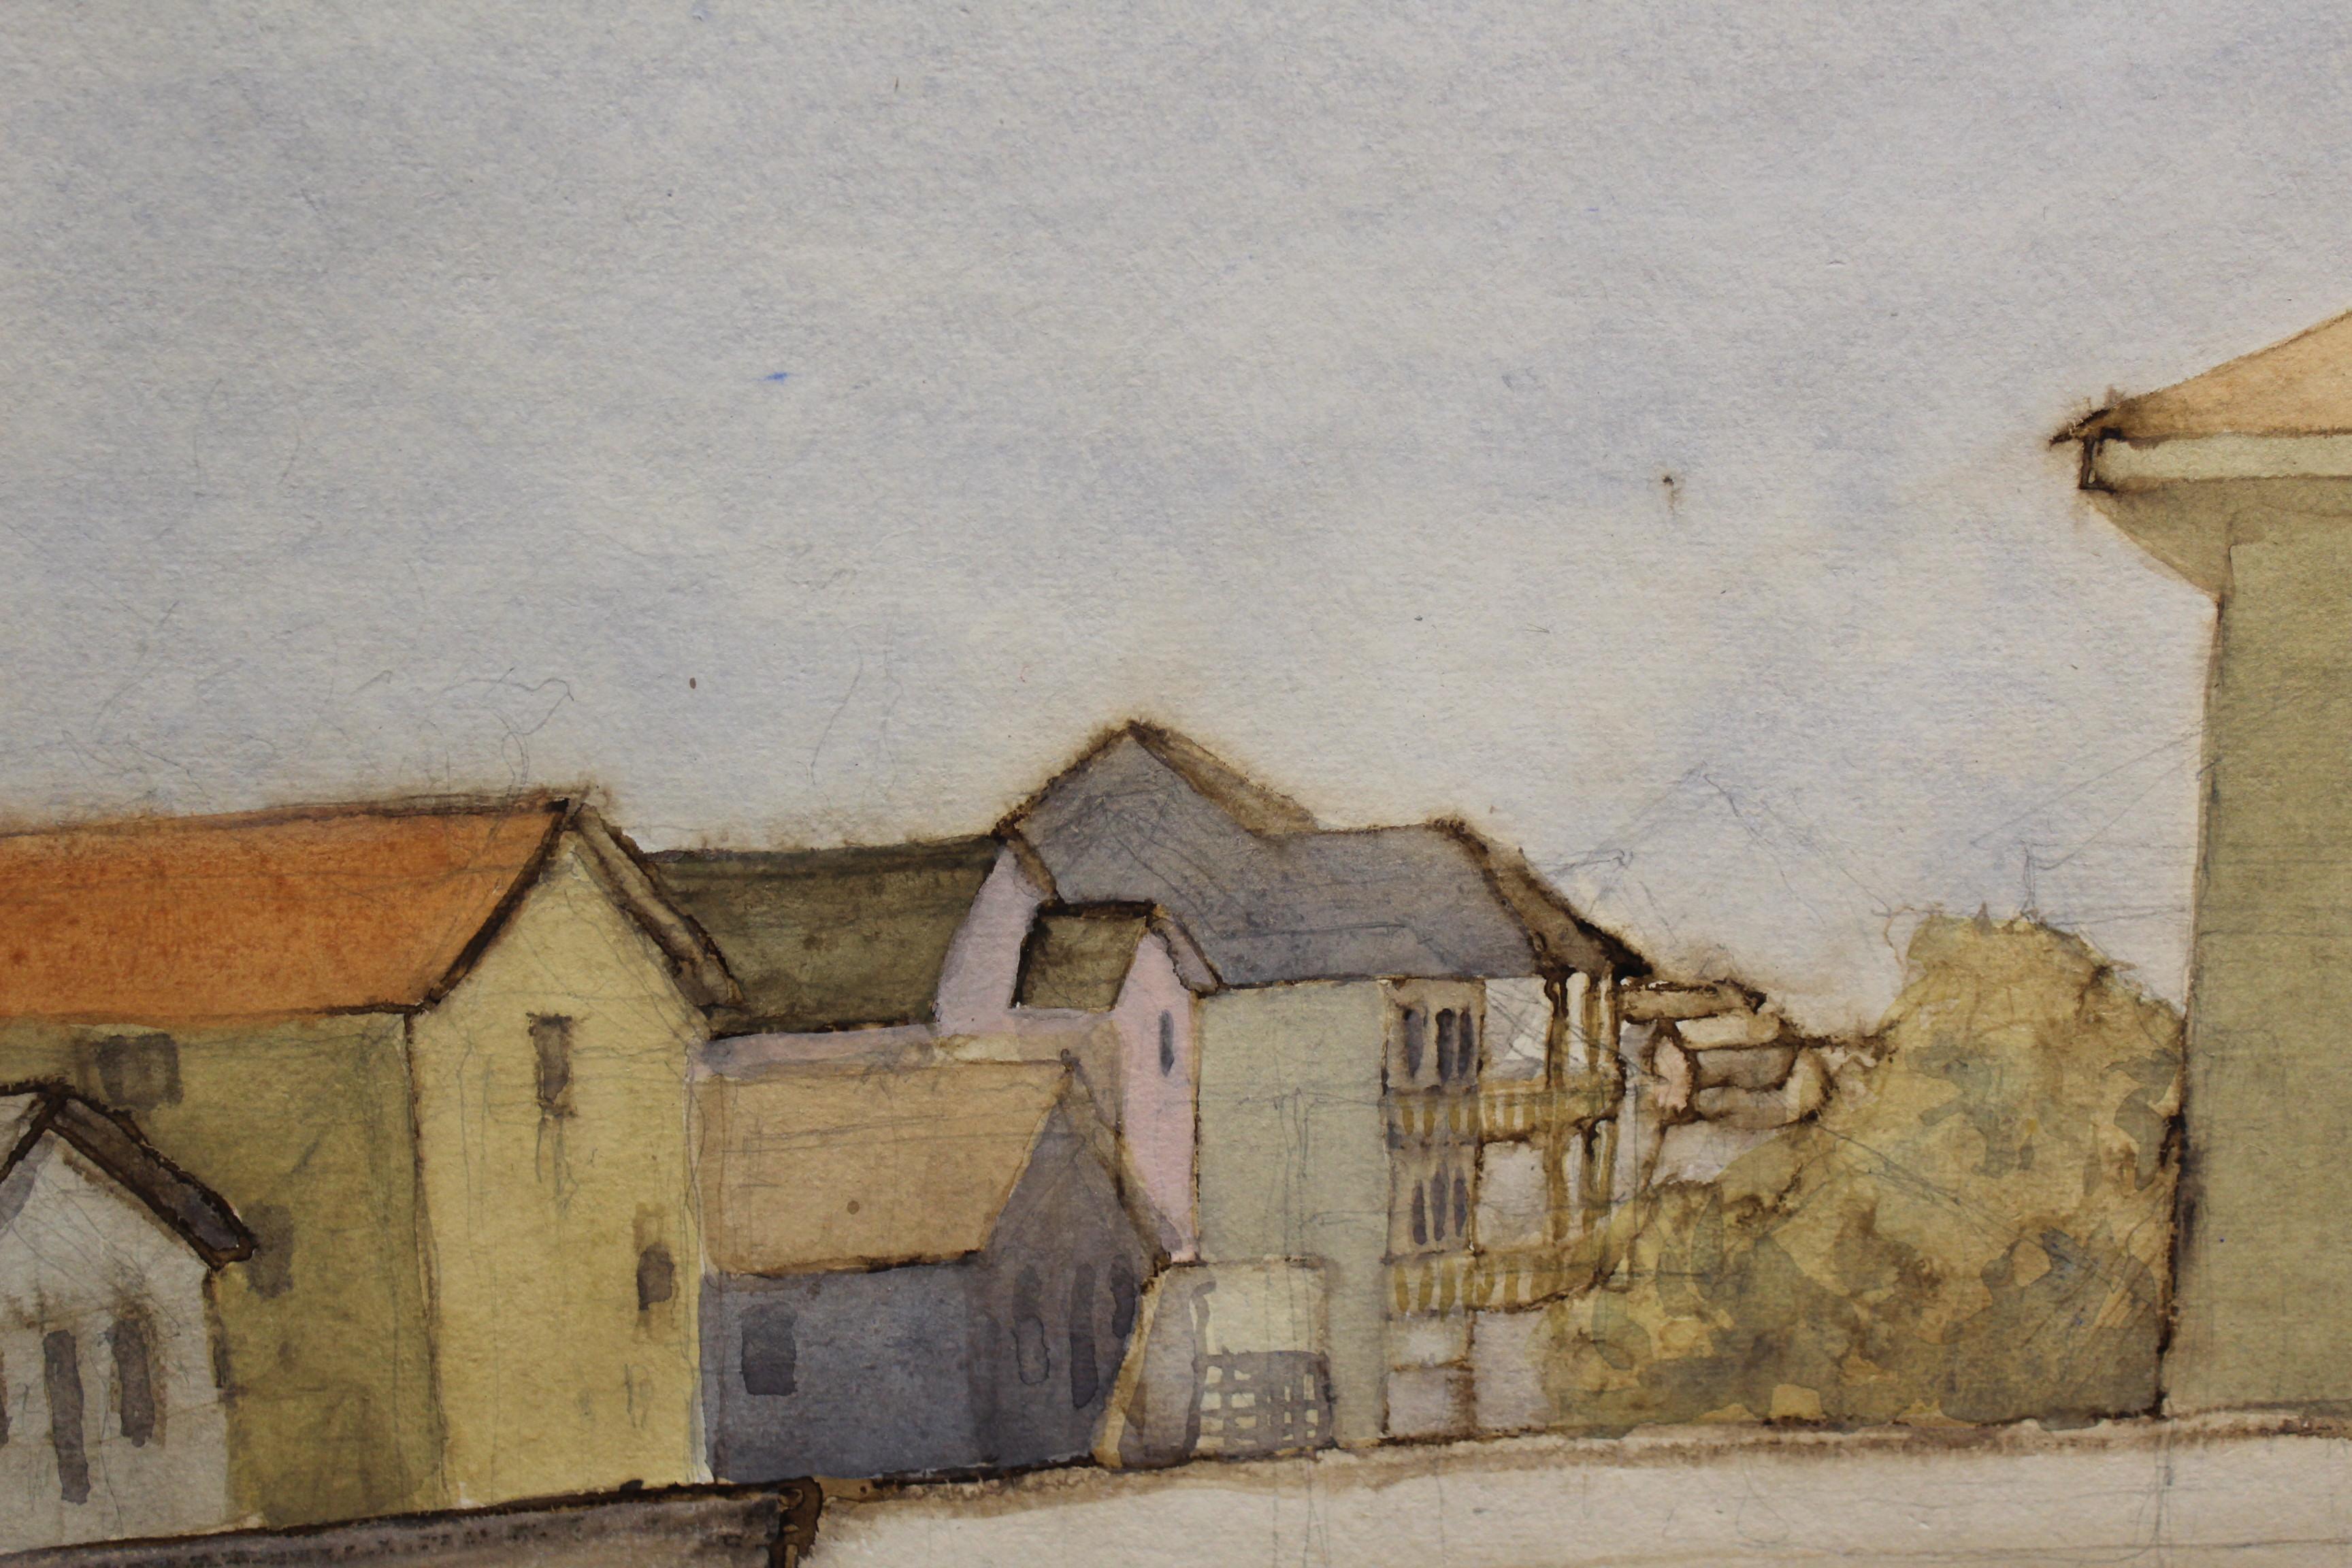 A nondescript seaside town in watercolor.